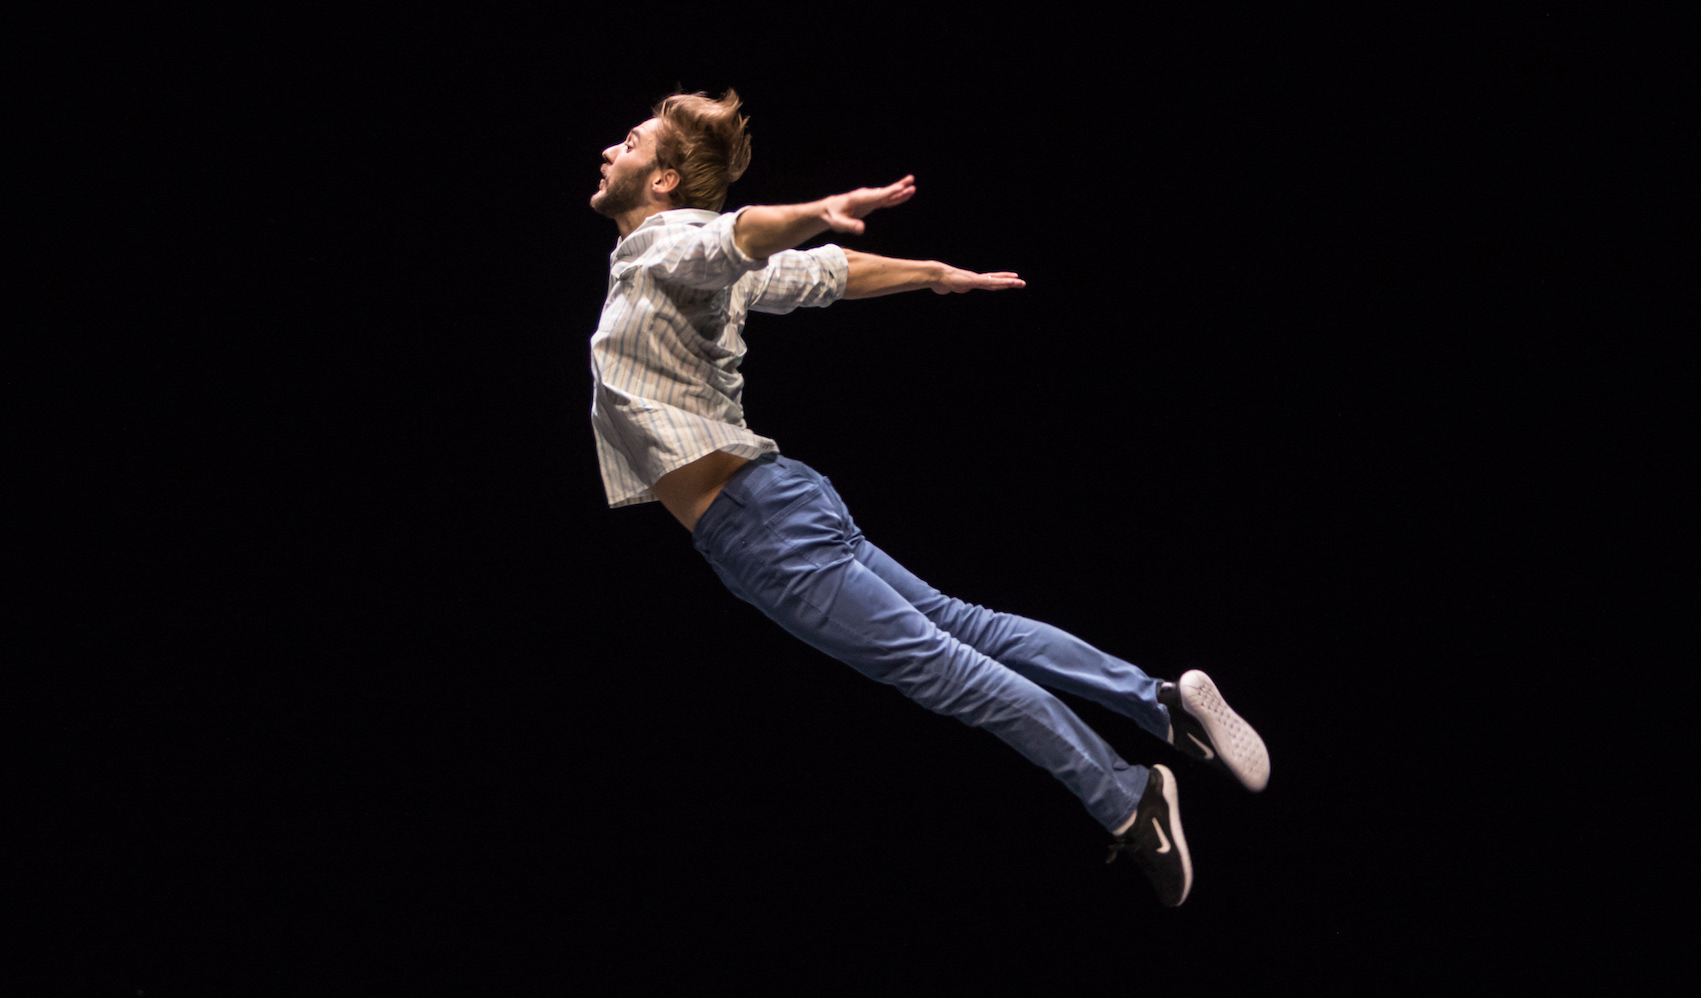 Dancer in full jump. Photo by Gregory Batardon.